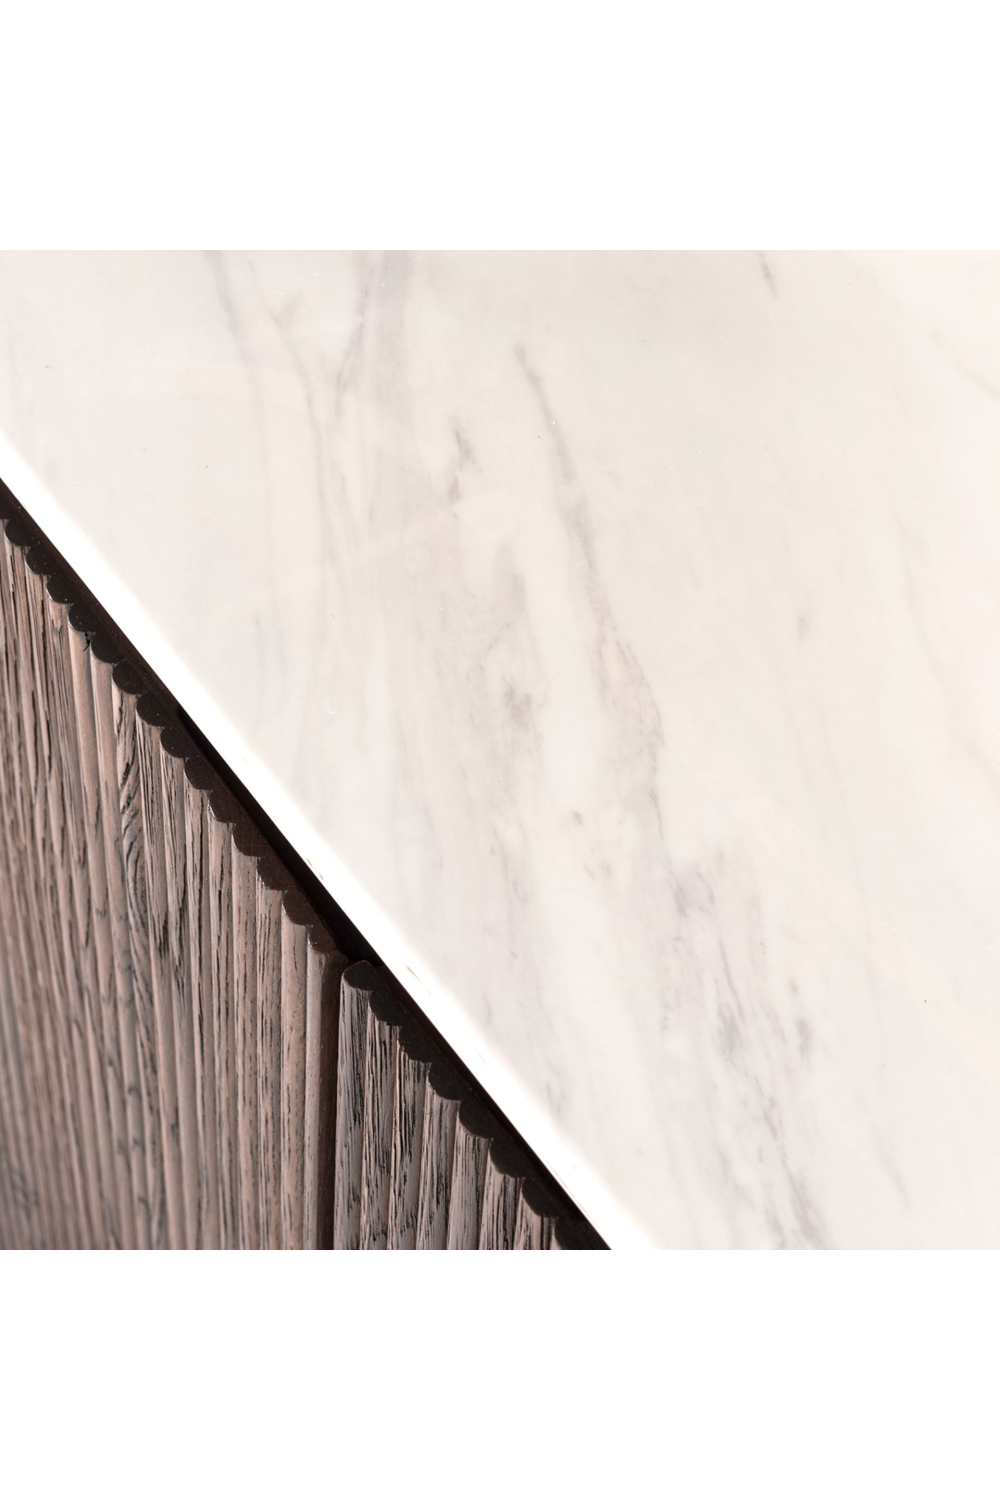 Modern Marble Cabinet | OROA Barkley | Oroa.com